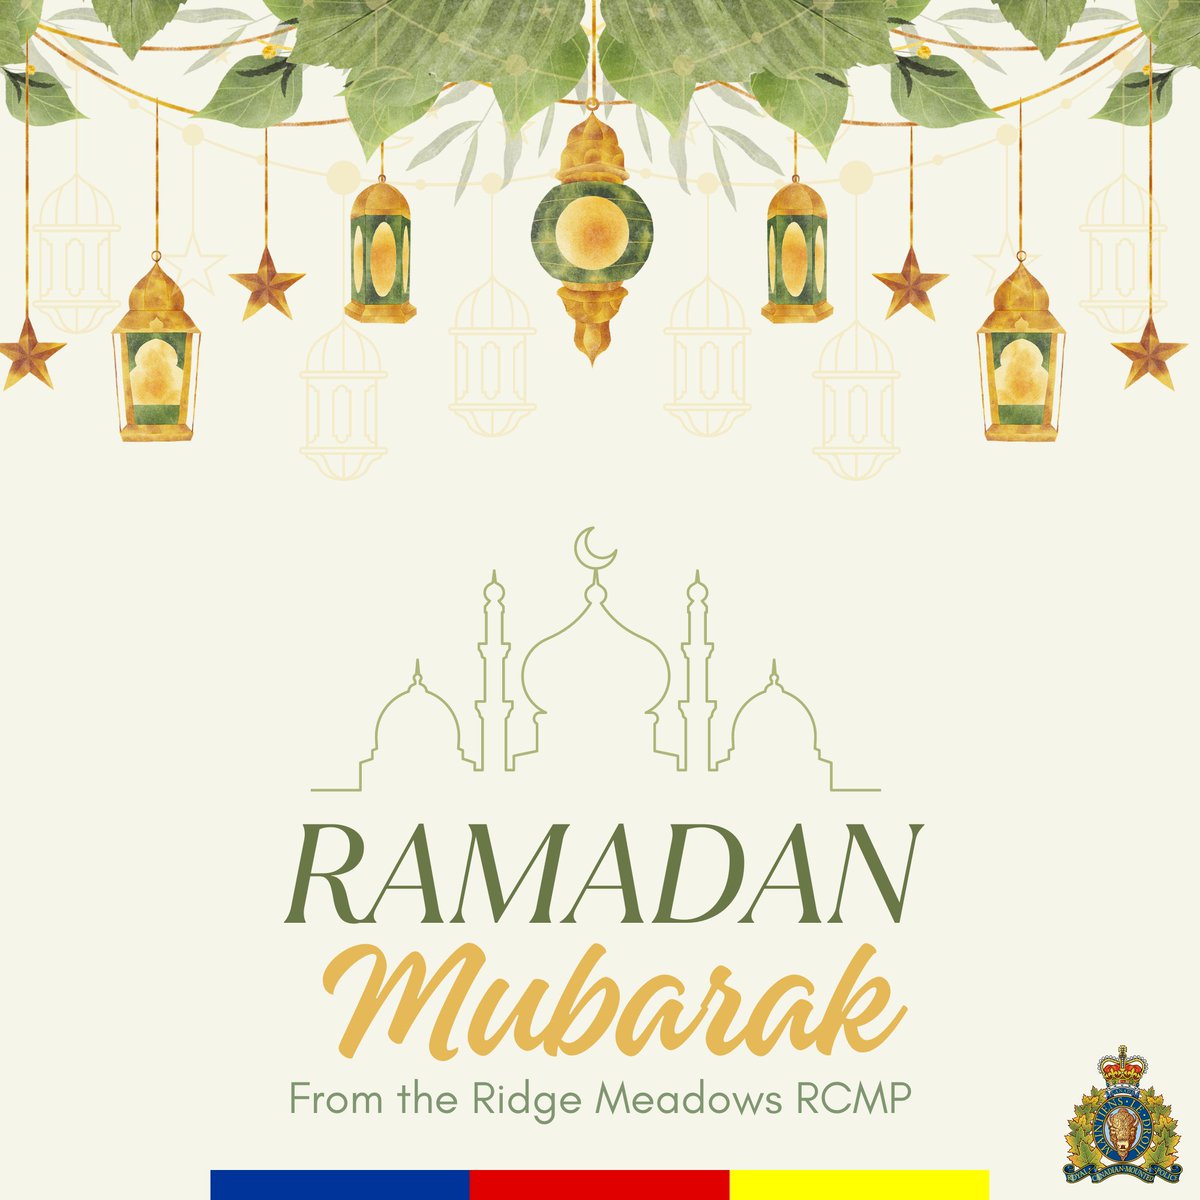 Wishing everyone who celebrates a blessed and peaceful #Ramadan ! #RamadanMubarak